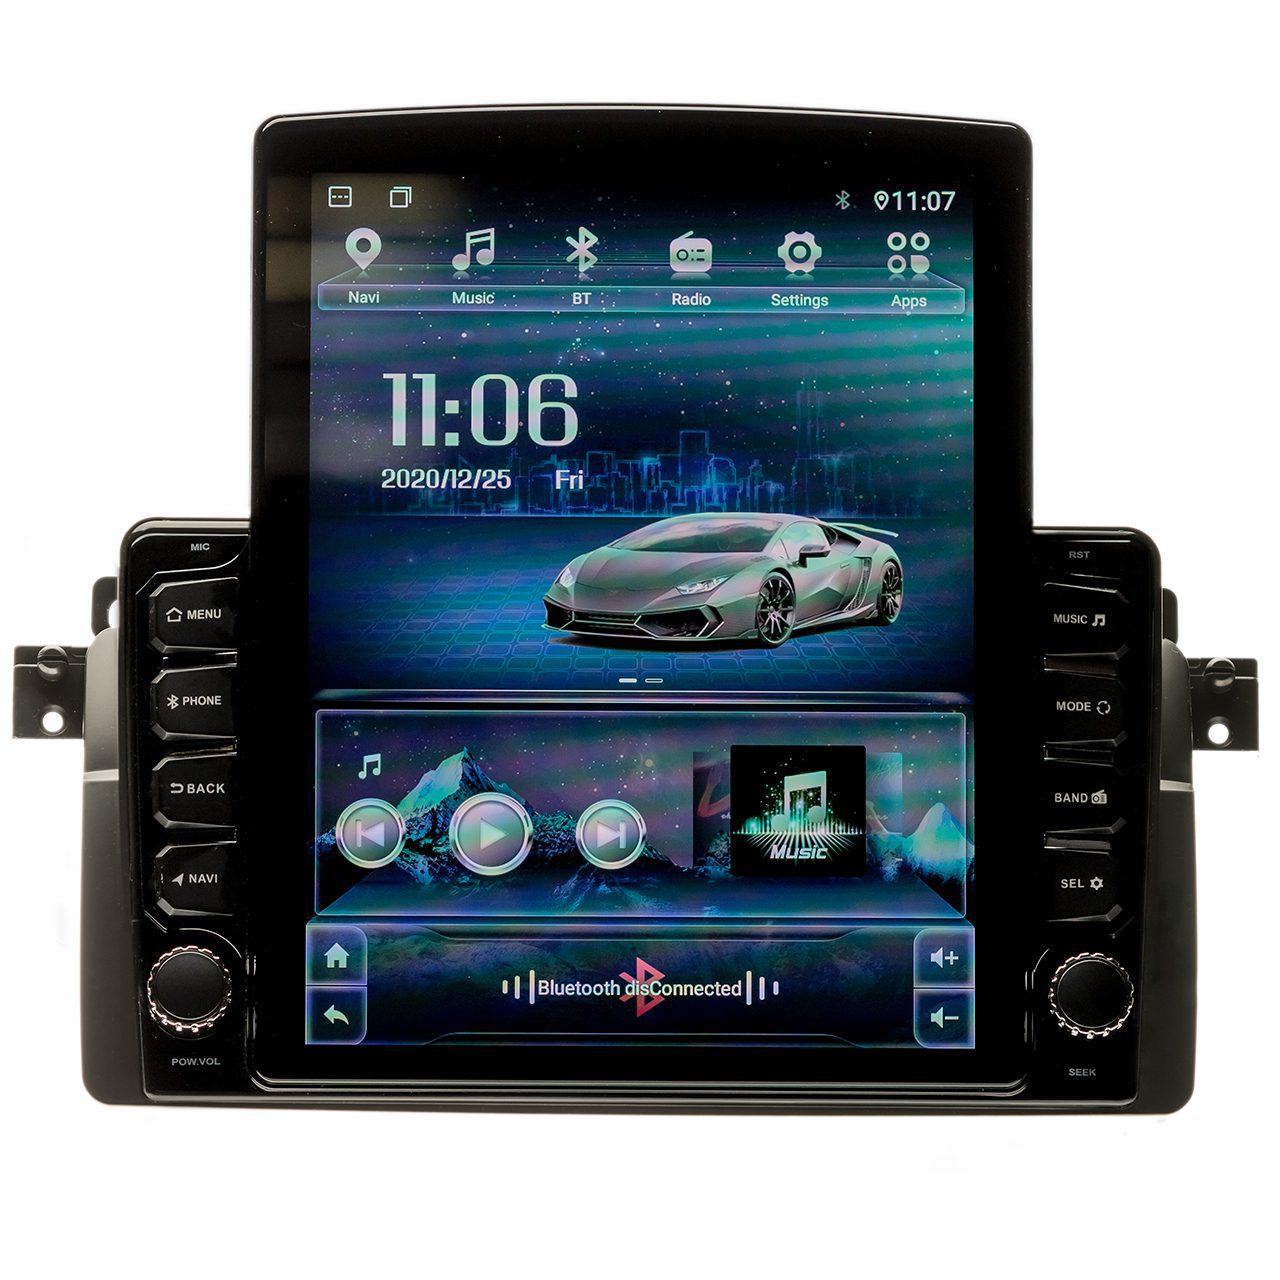 Navigatie AUTONAV PLUS Android GPS Dedicata BMW E46, Model XPERT Memorie 16GB Stocare, 1GB DDR3 RAM, Butoane Si Volum Fizice, Display Vertical Stil Tesla 10